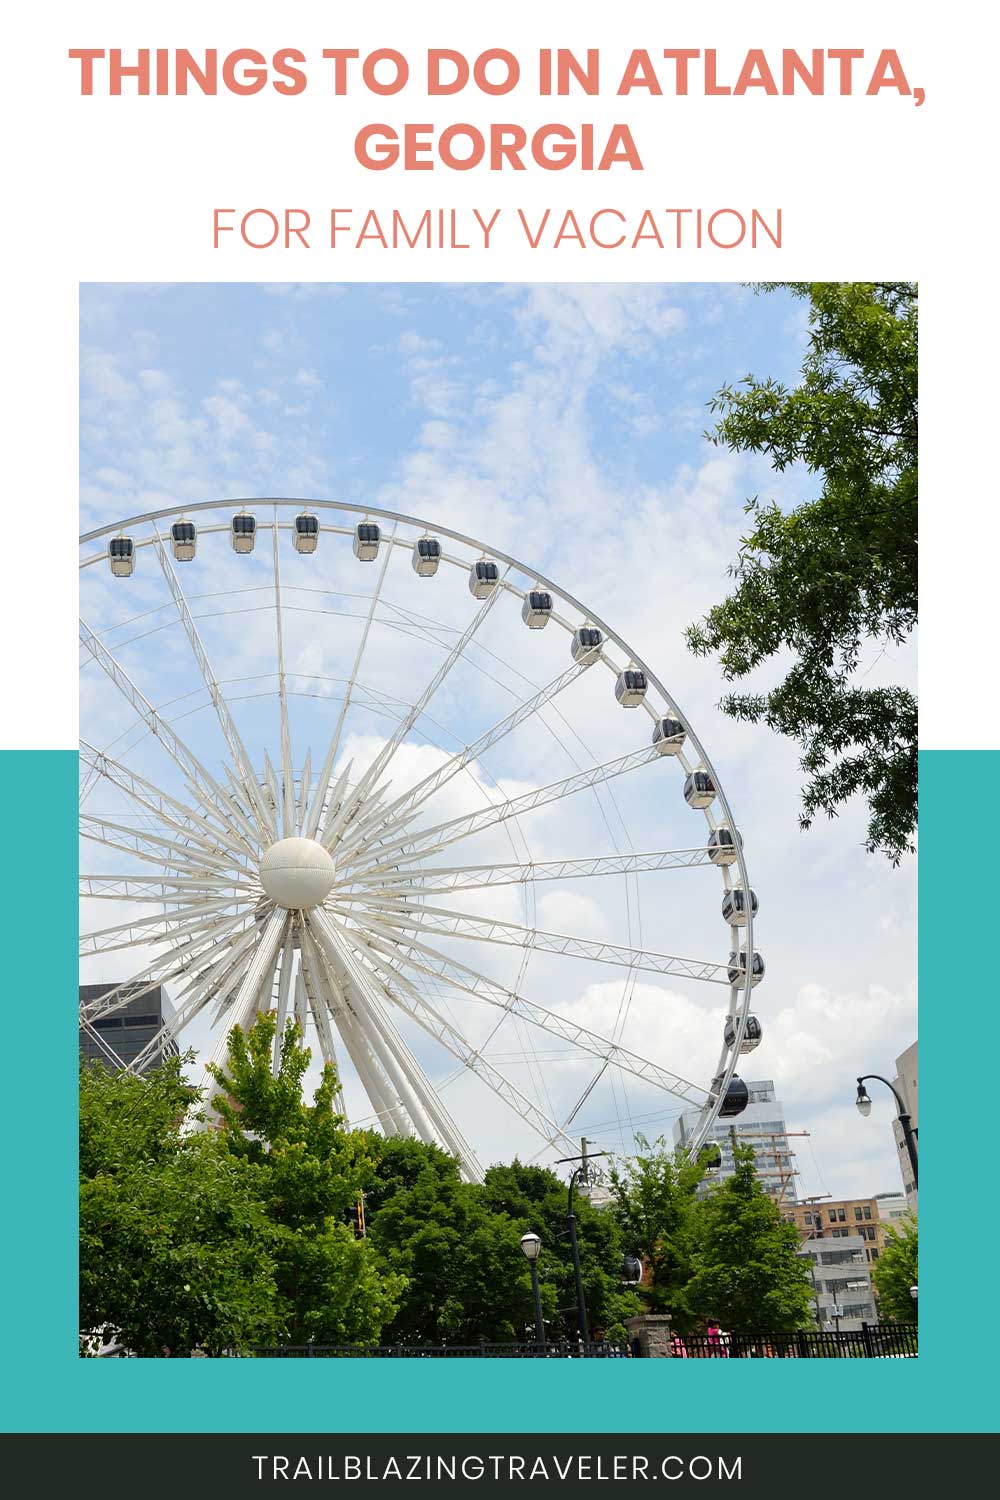 A Big white ferris wheel - Things to do in Atlanta, Georgia for Family Vacation.